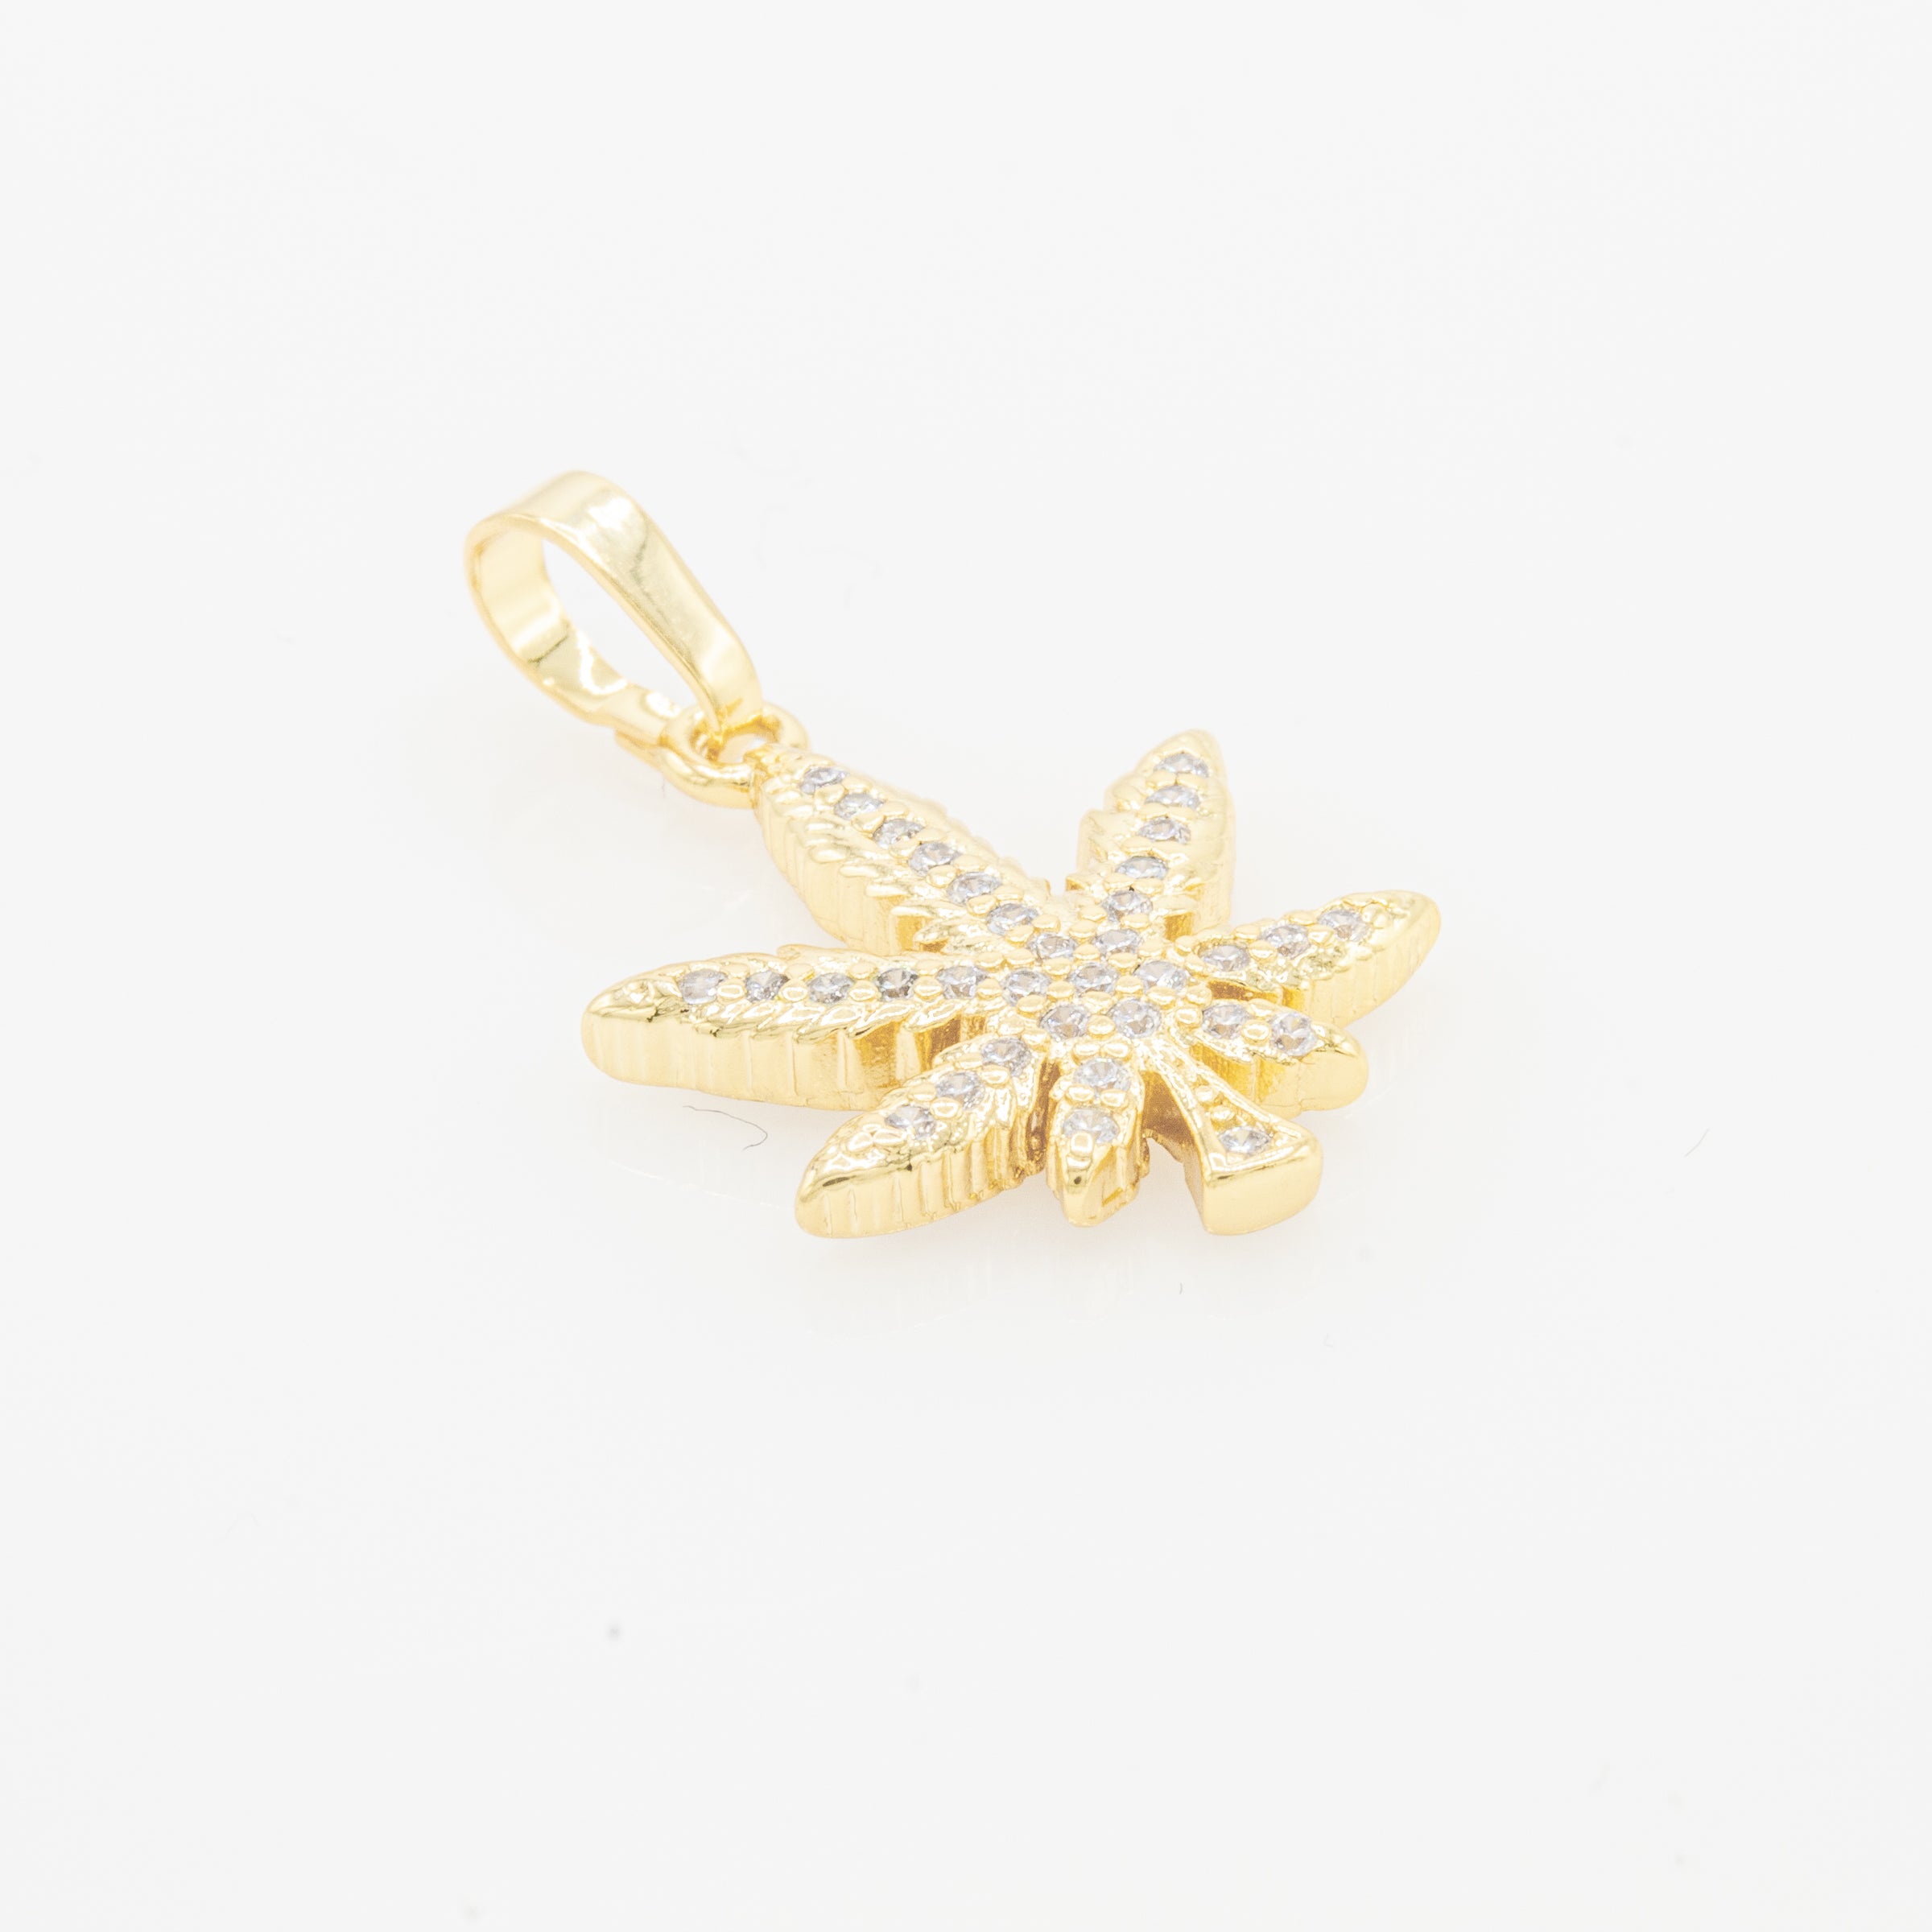 Cannabis Leaf Cubic Zirconia Pendant 14K Gold Filled Women Fashion Jewelry